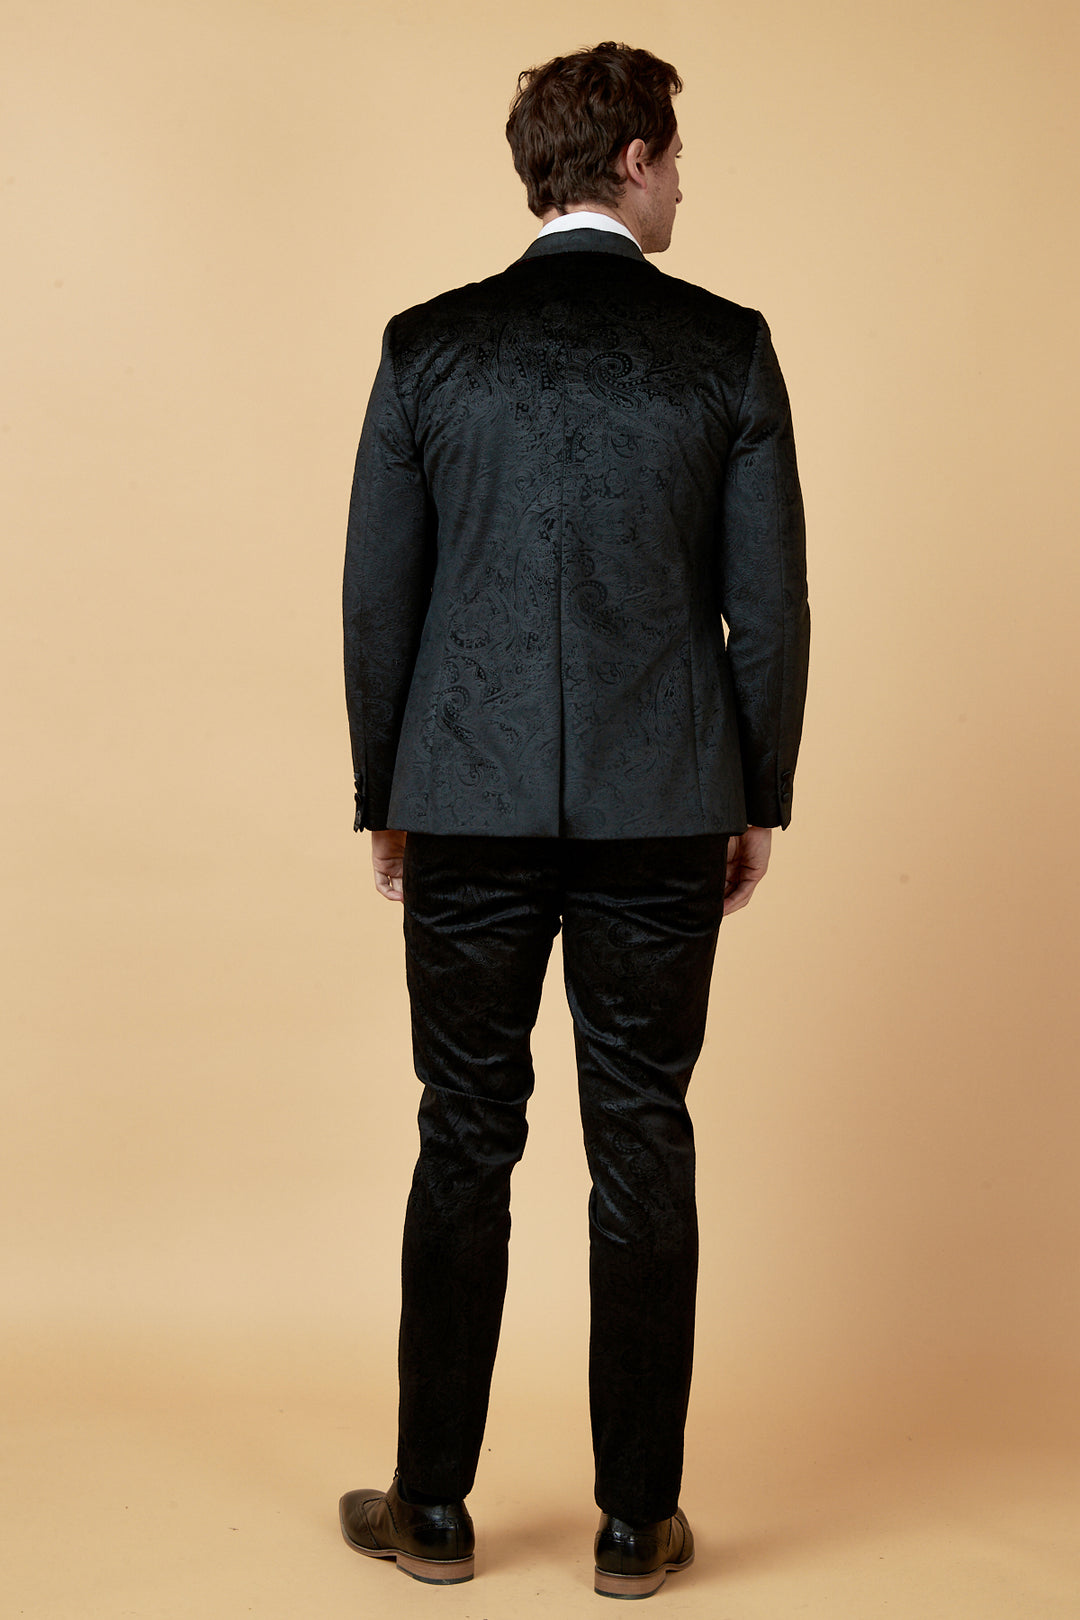 SIMON - Black Velvet Jacquard Three Piece Suit